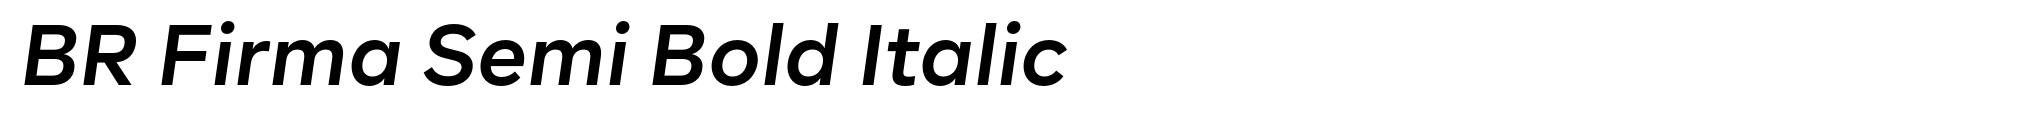 BR Firma Semi Bold Italic image